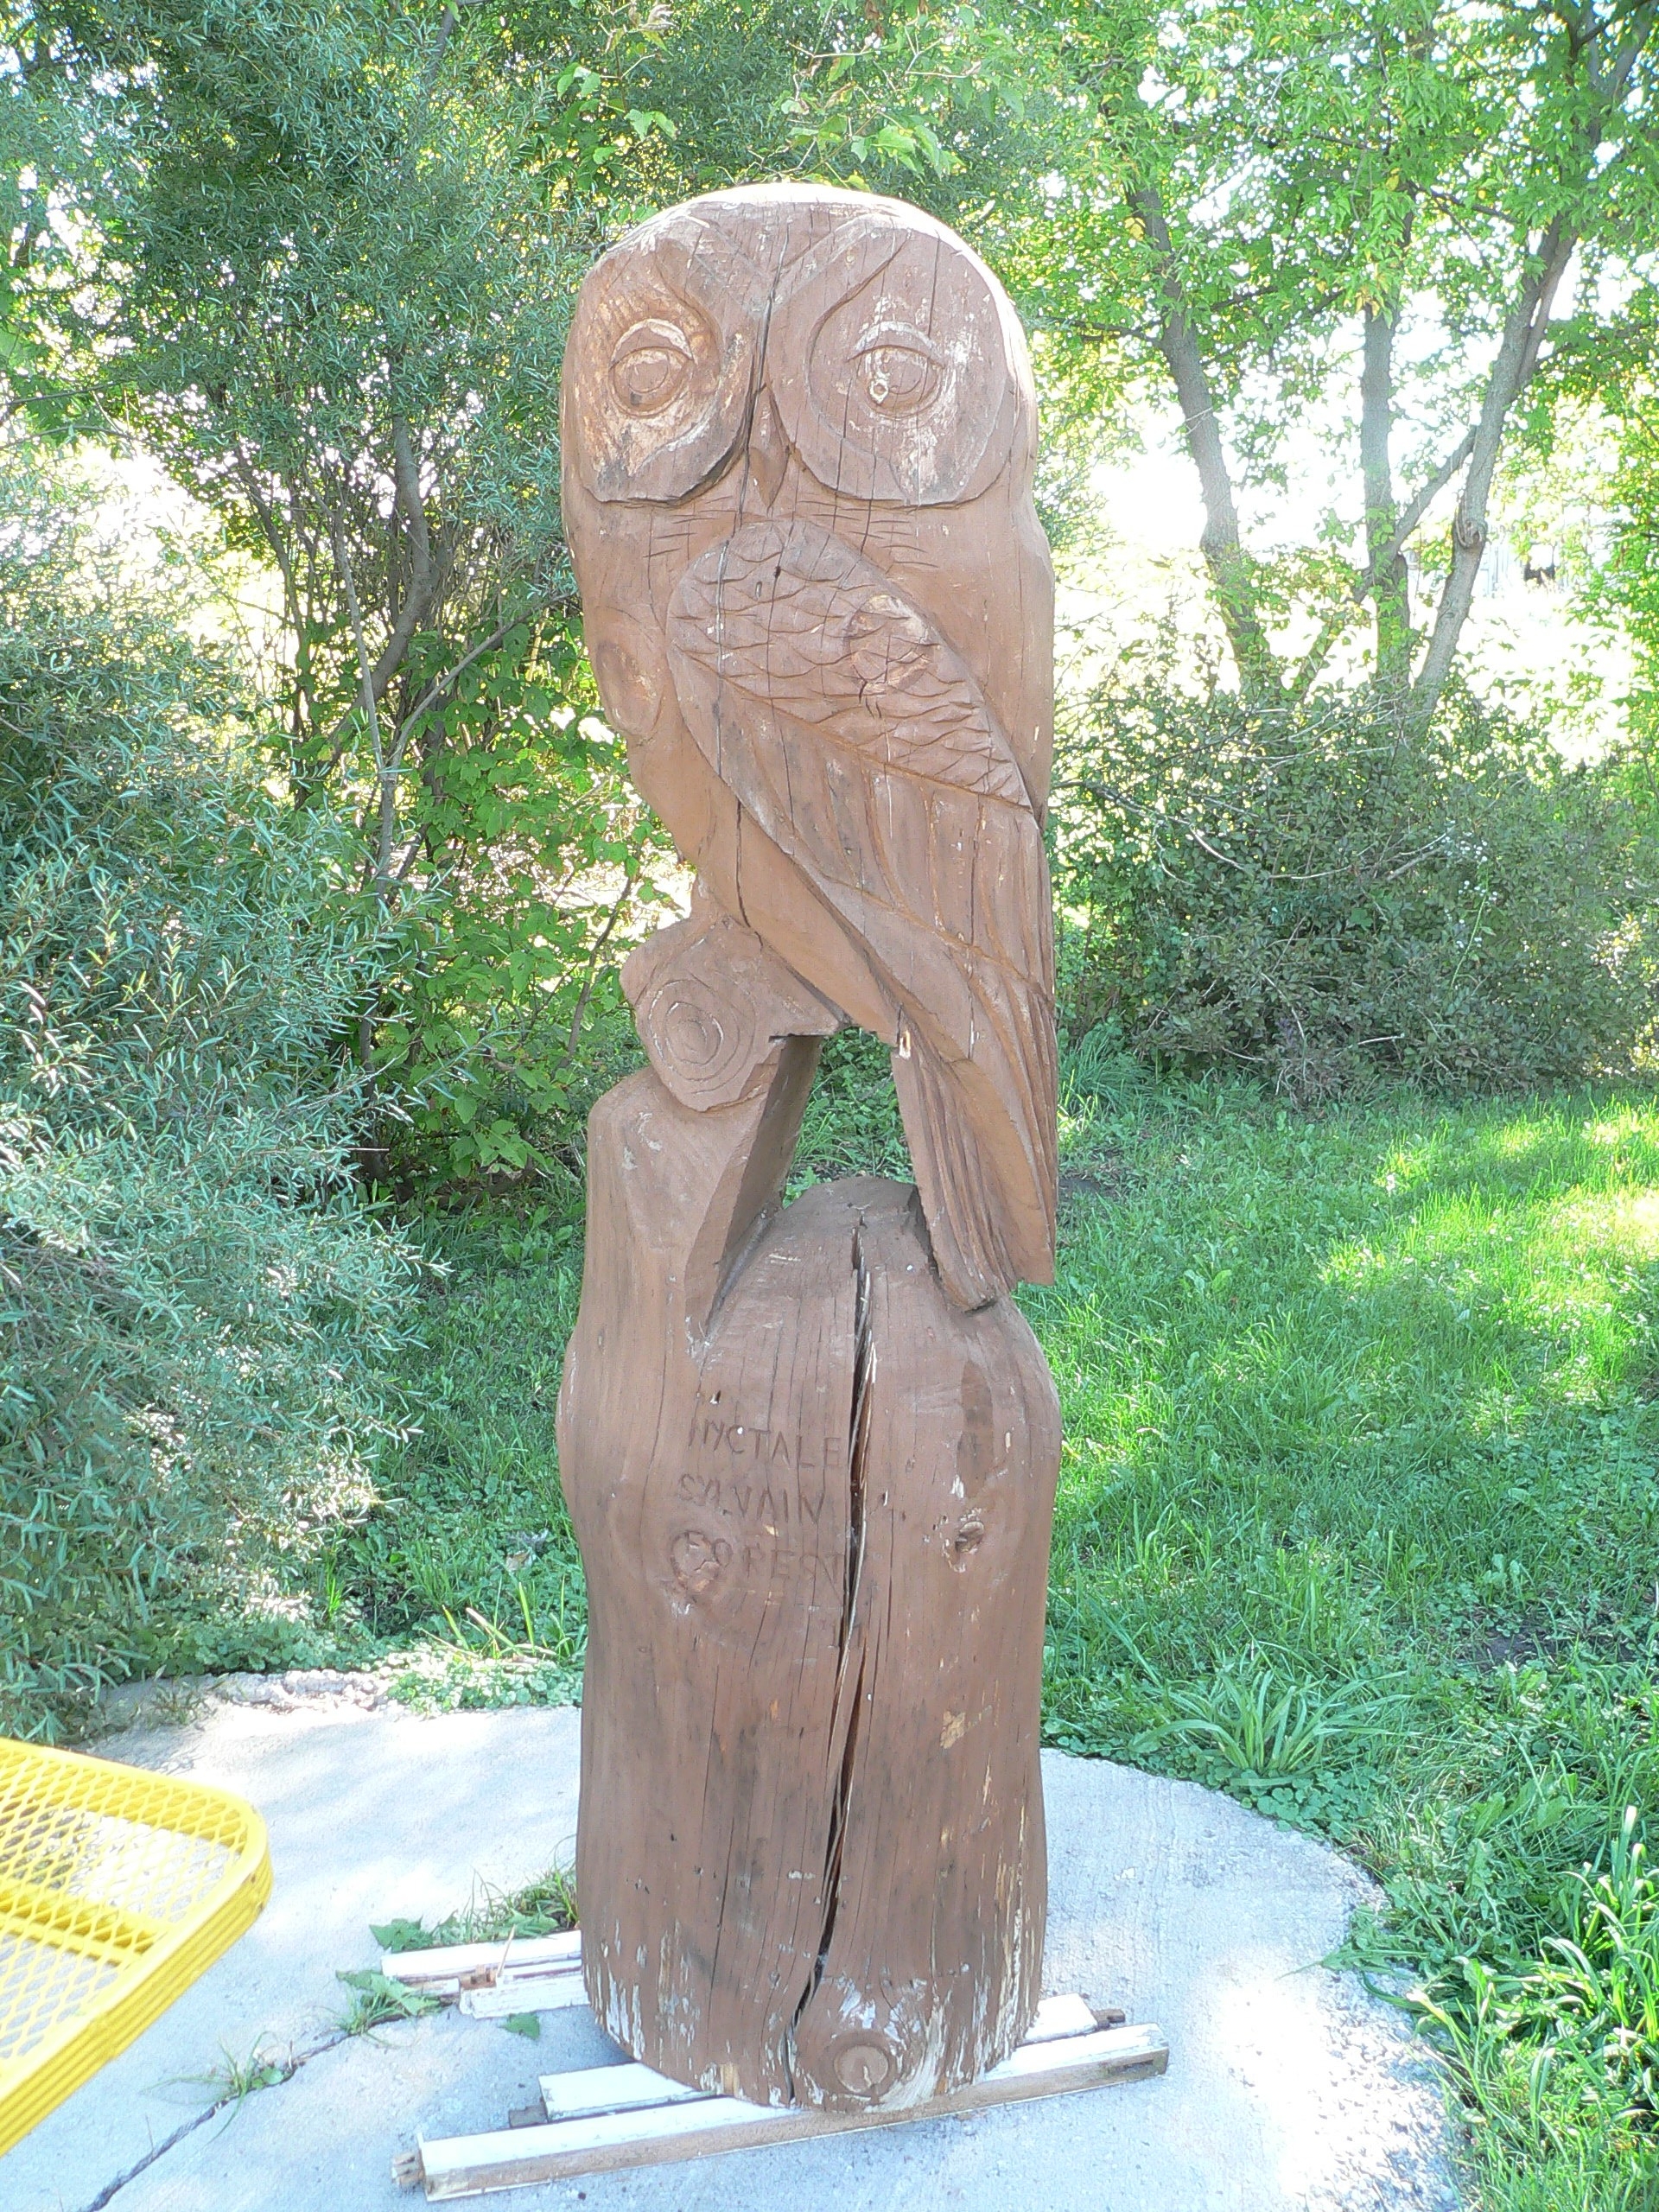 Gros totem hibou sculpter en bois # 10522 